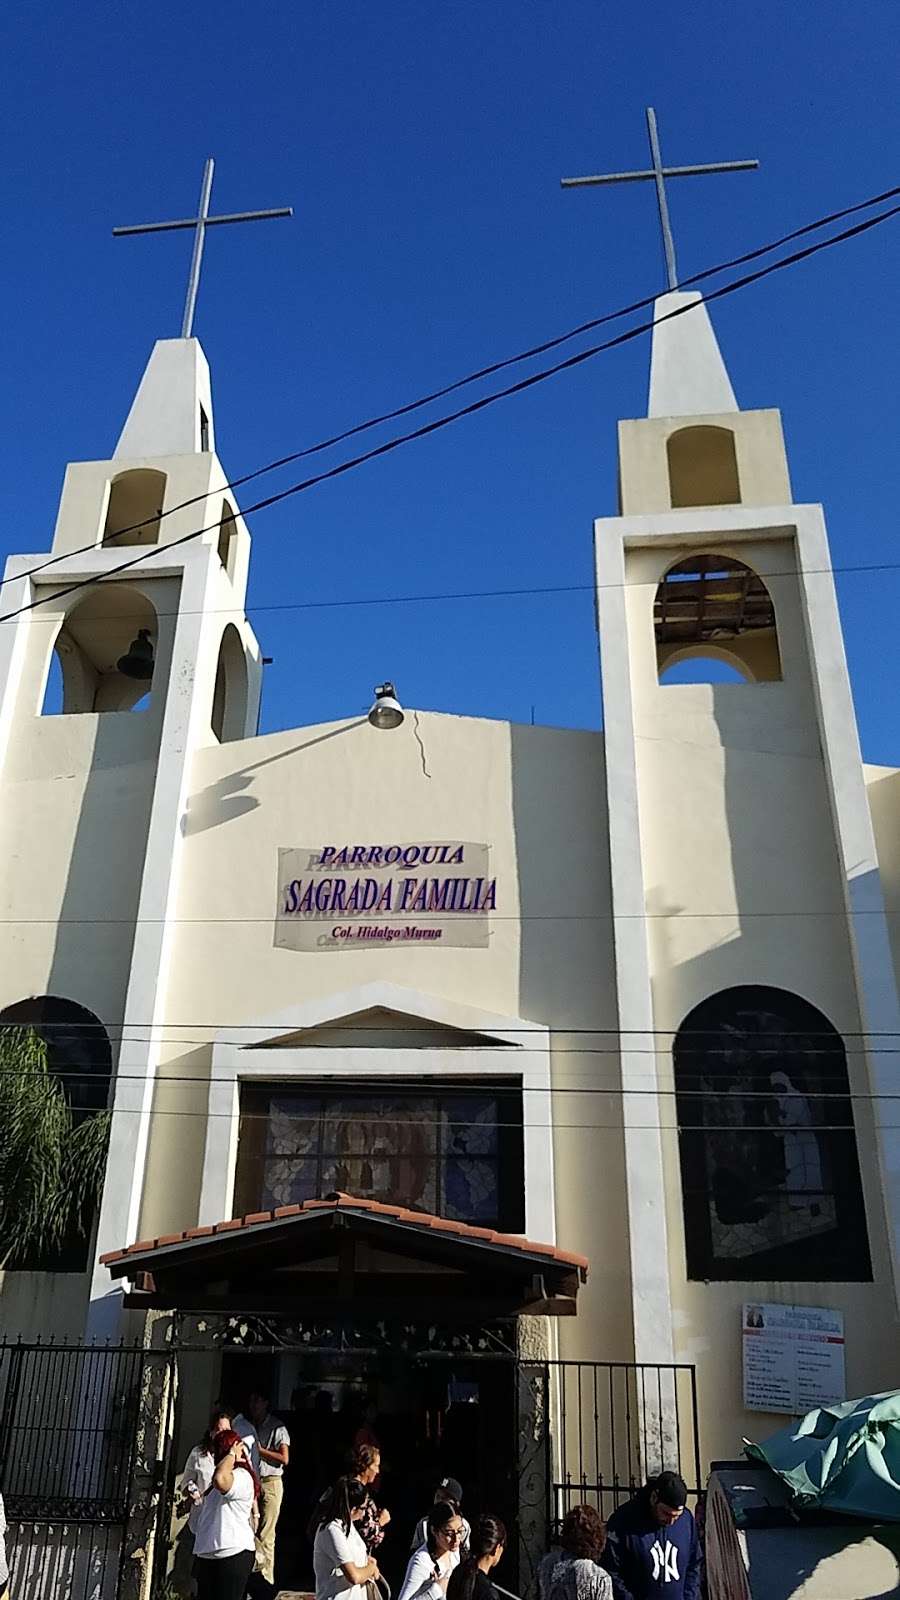 parroquia sagrada familia | Calle Cerrada Huesca 4013, Hidalgo Murua, 22465 Tijuana, B.C., Mexico | Phone: 664 381 7569